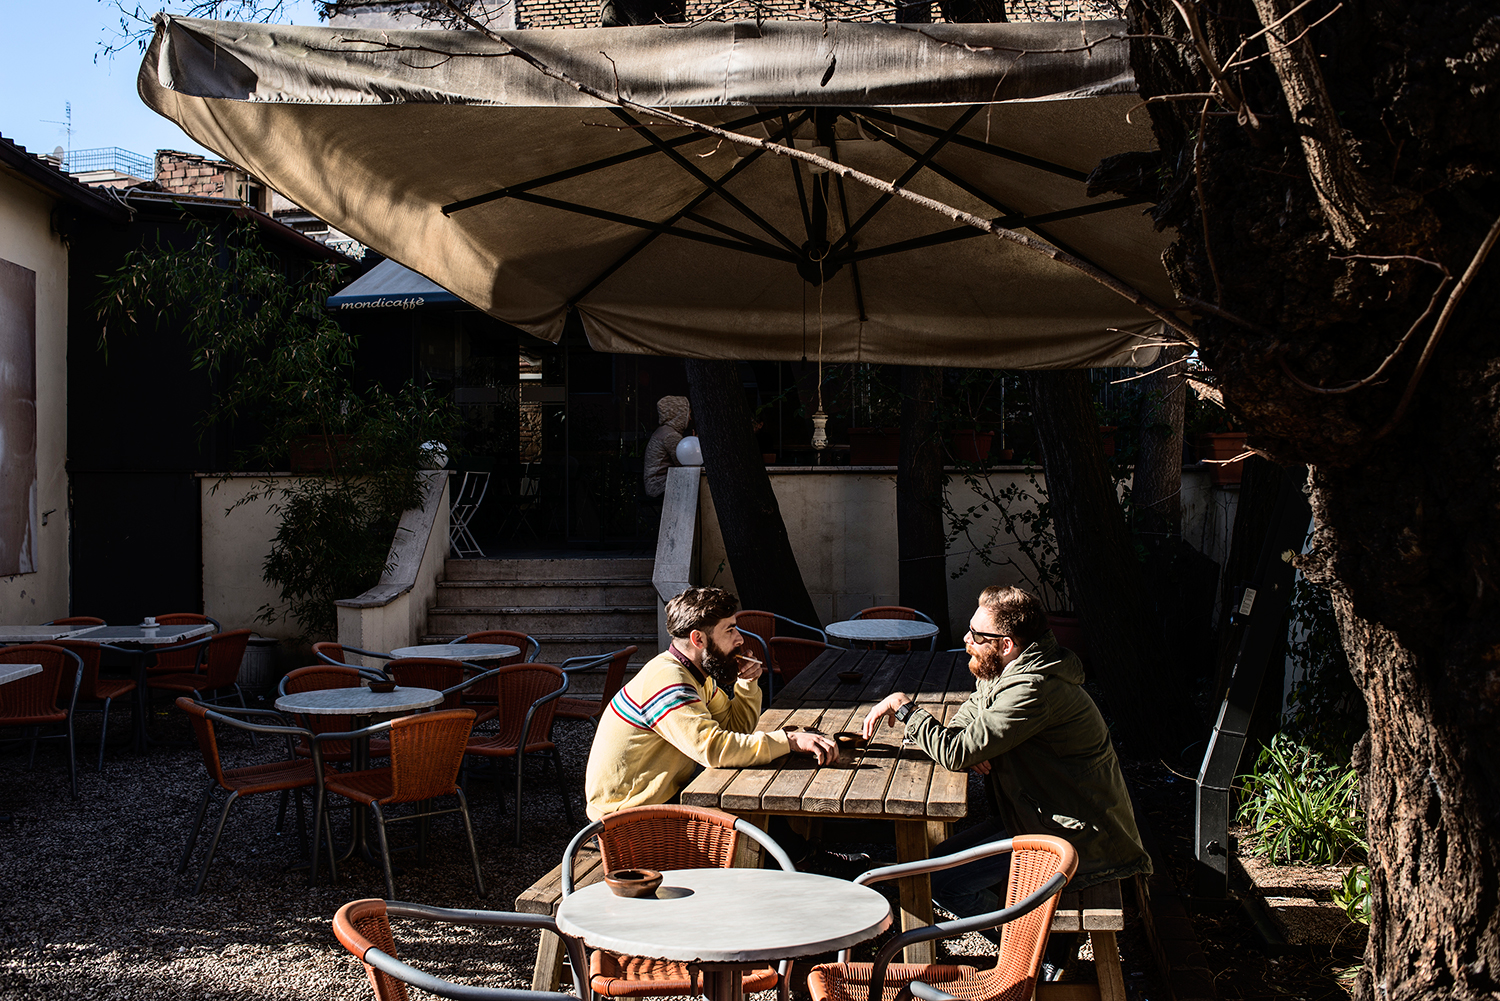 Bar Necci, Pigneto, Rome, January 2015.